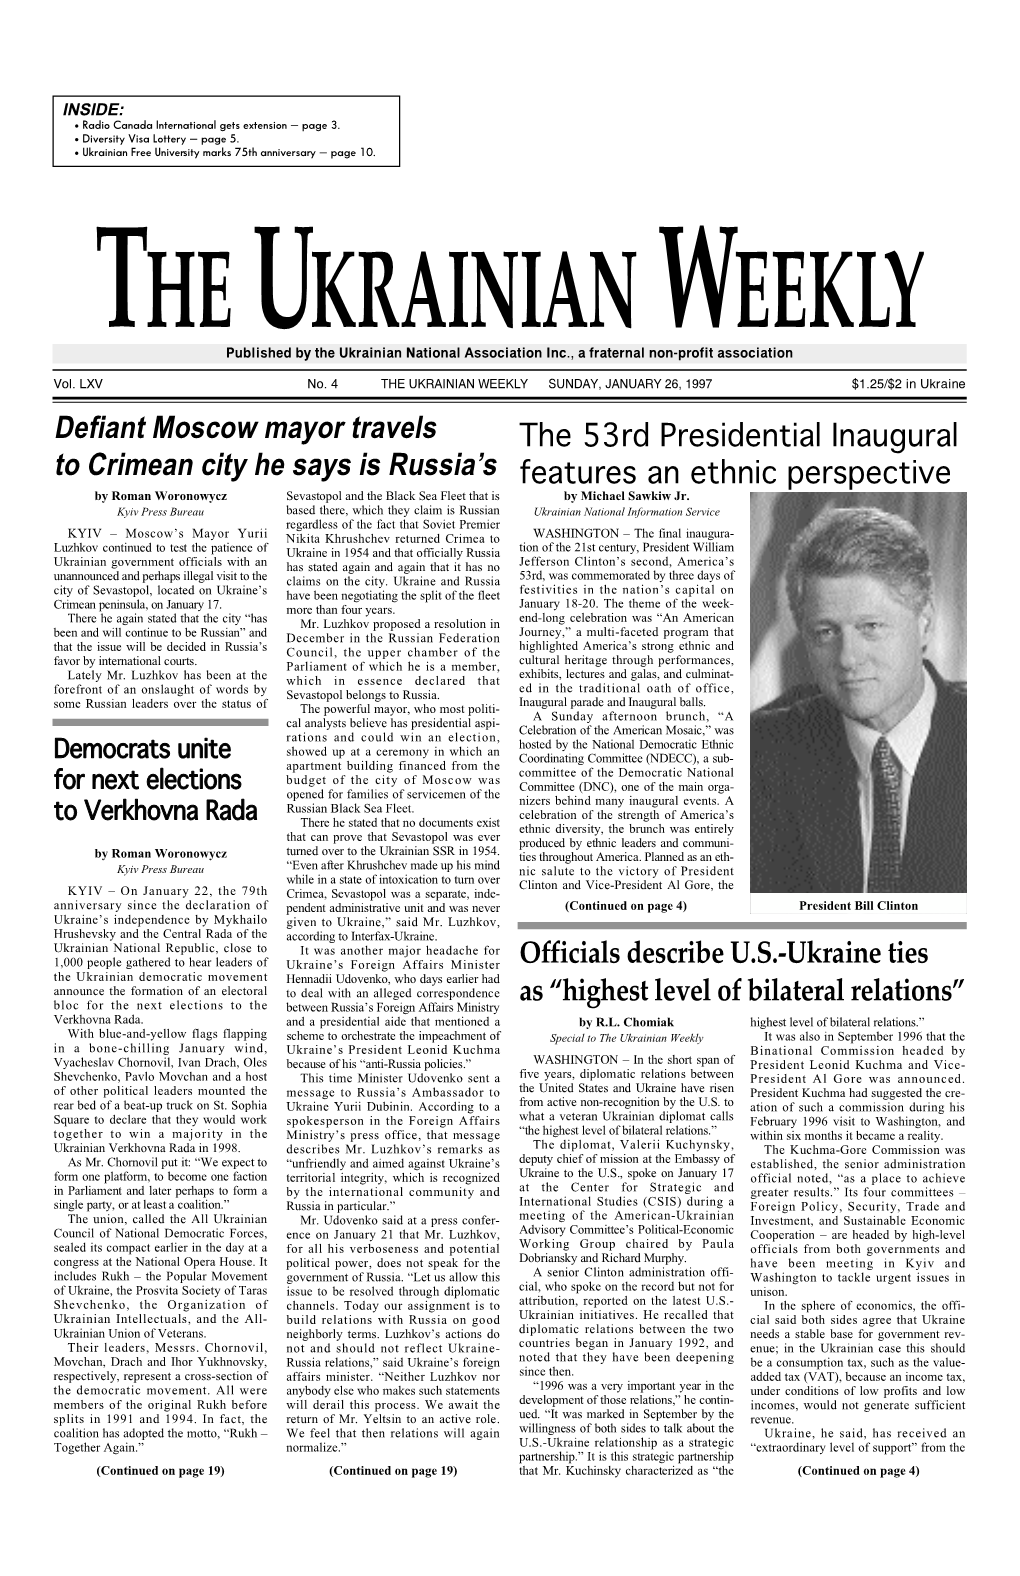 The Ukrainian Weekly 1997, No.4